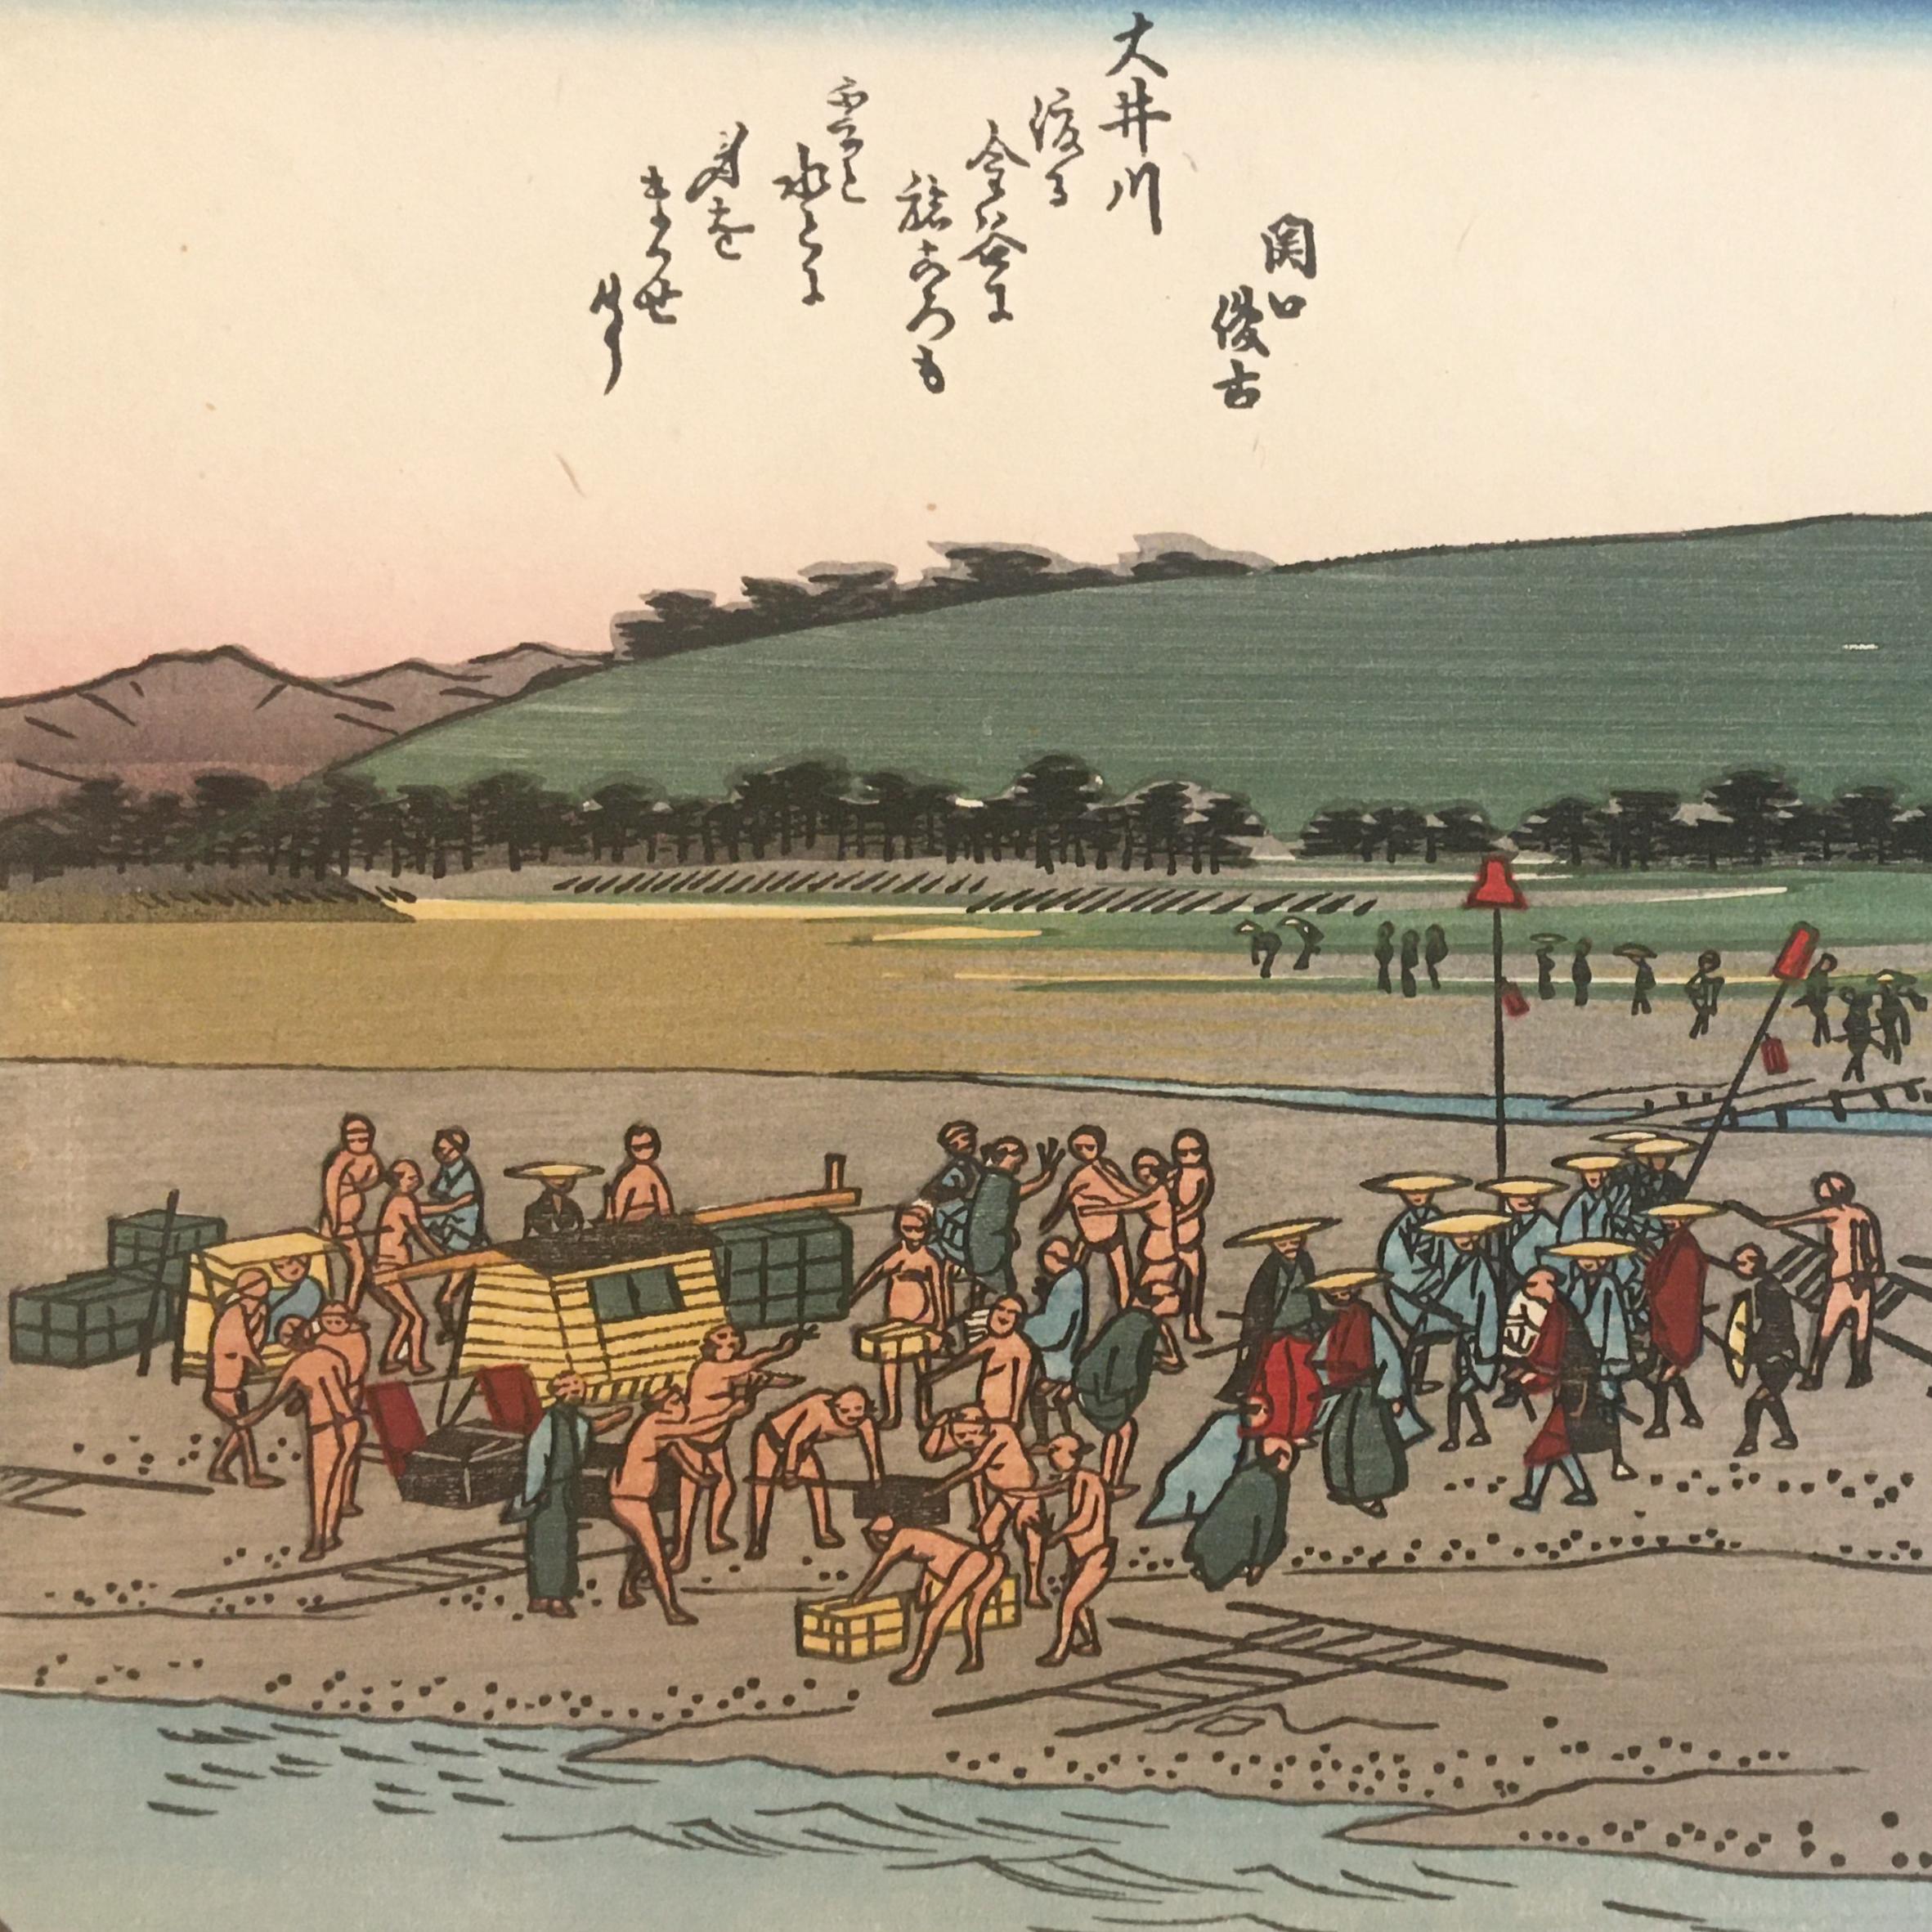 'Travelers at Kanaya', After Utagawa Hiroshige, Ukiyo-E Woodblock, Tokaido, Edo - Print by Utagawa Hiroshige (Ando Hiroshige)